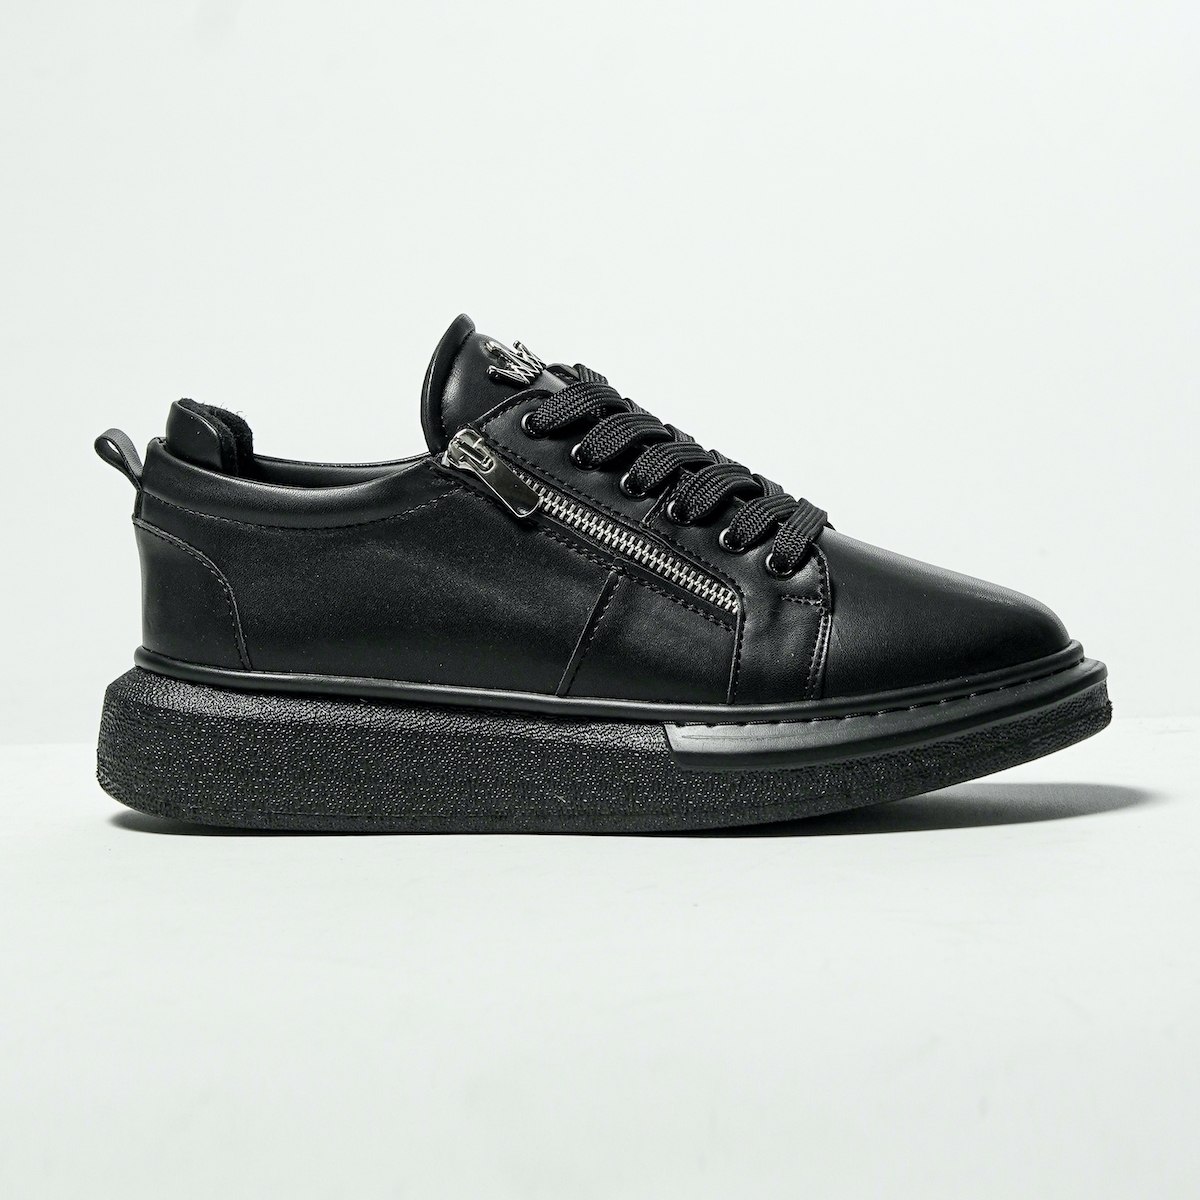 Hype Sole Zipped Style Sneakers in Black - 1